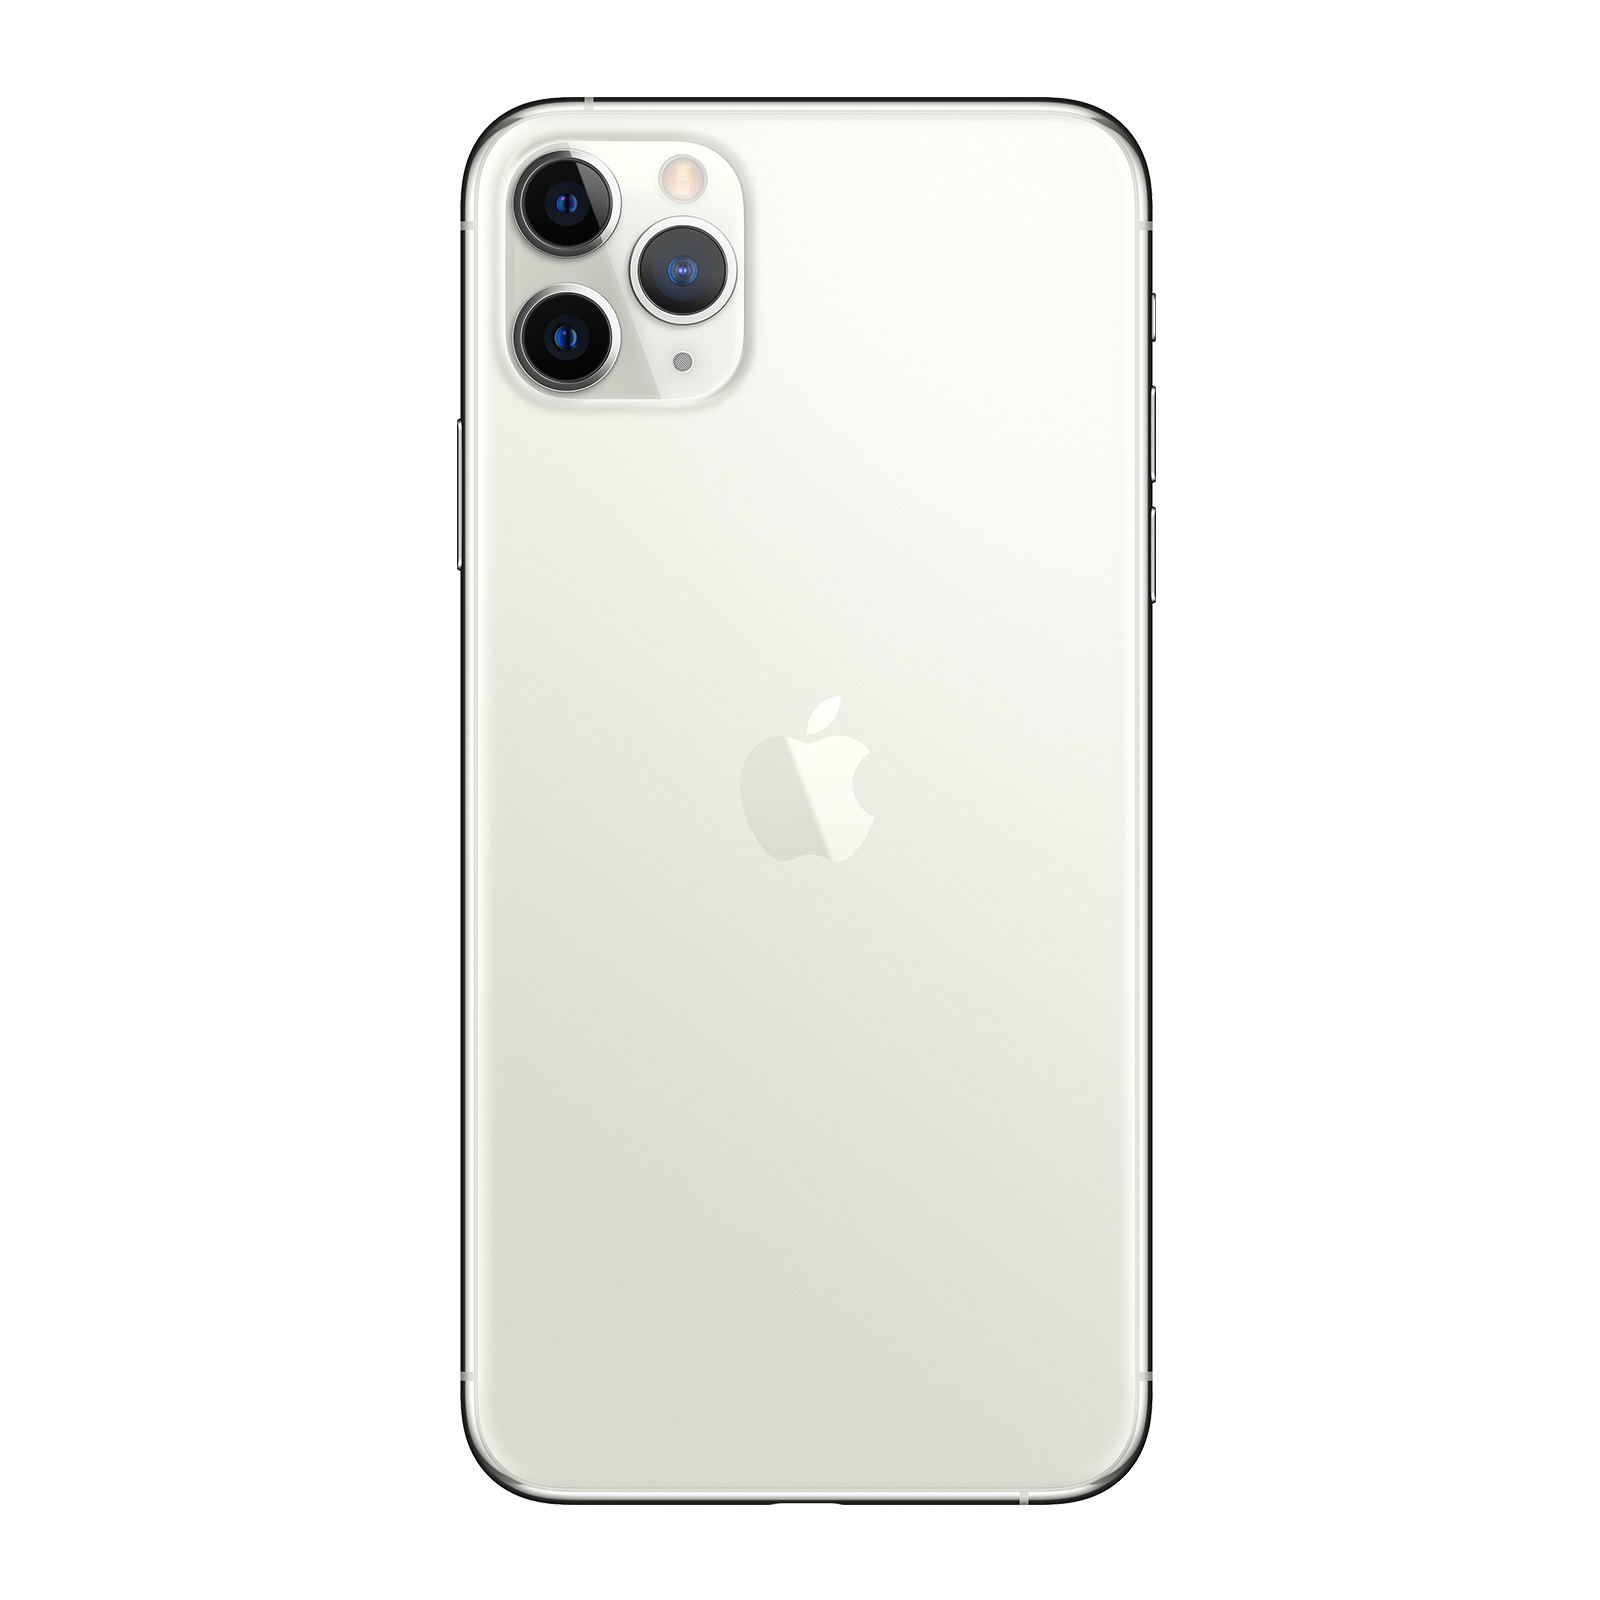 Apple iPhone 11 Pro 64GB Silver Fair - Sprint